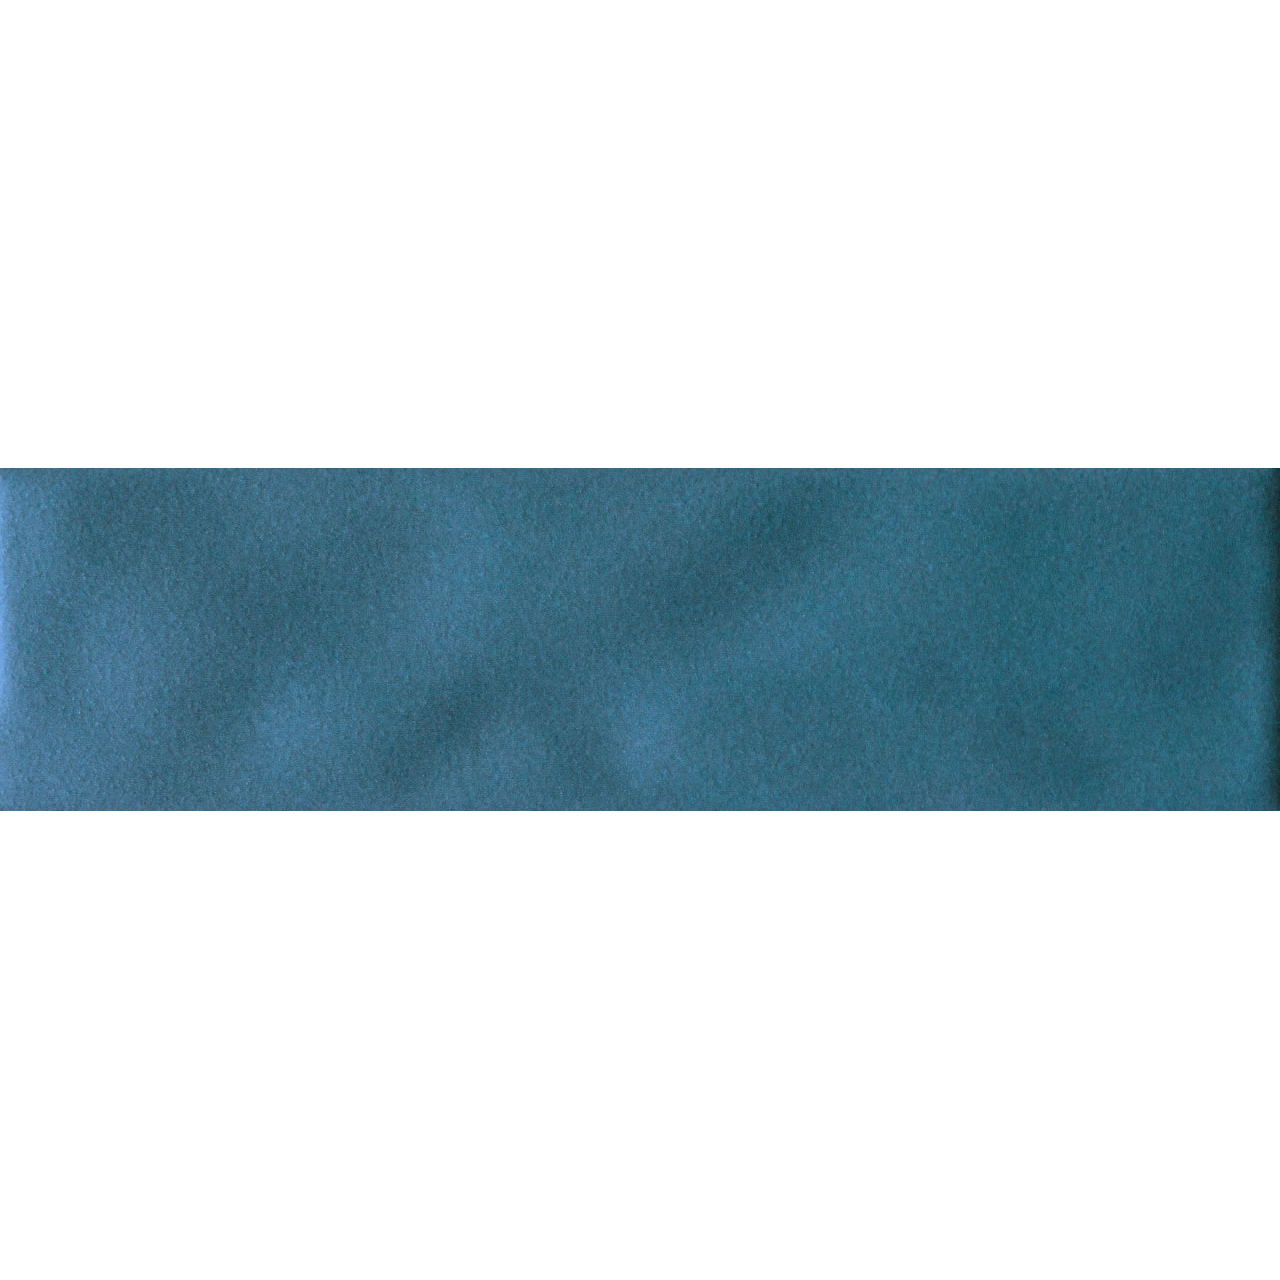 zelli-blue-mt-7x25cm-01